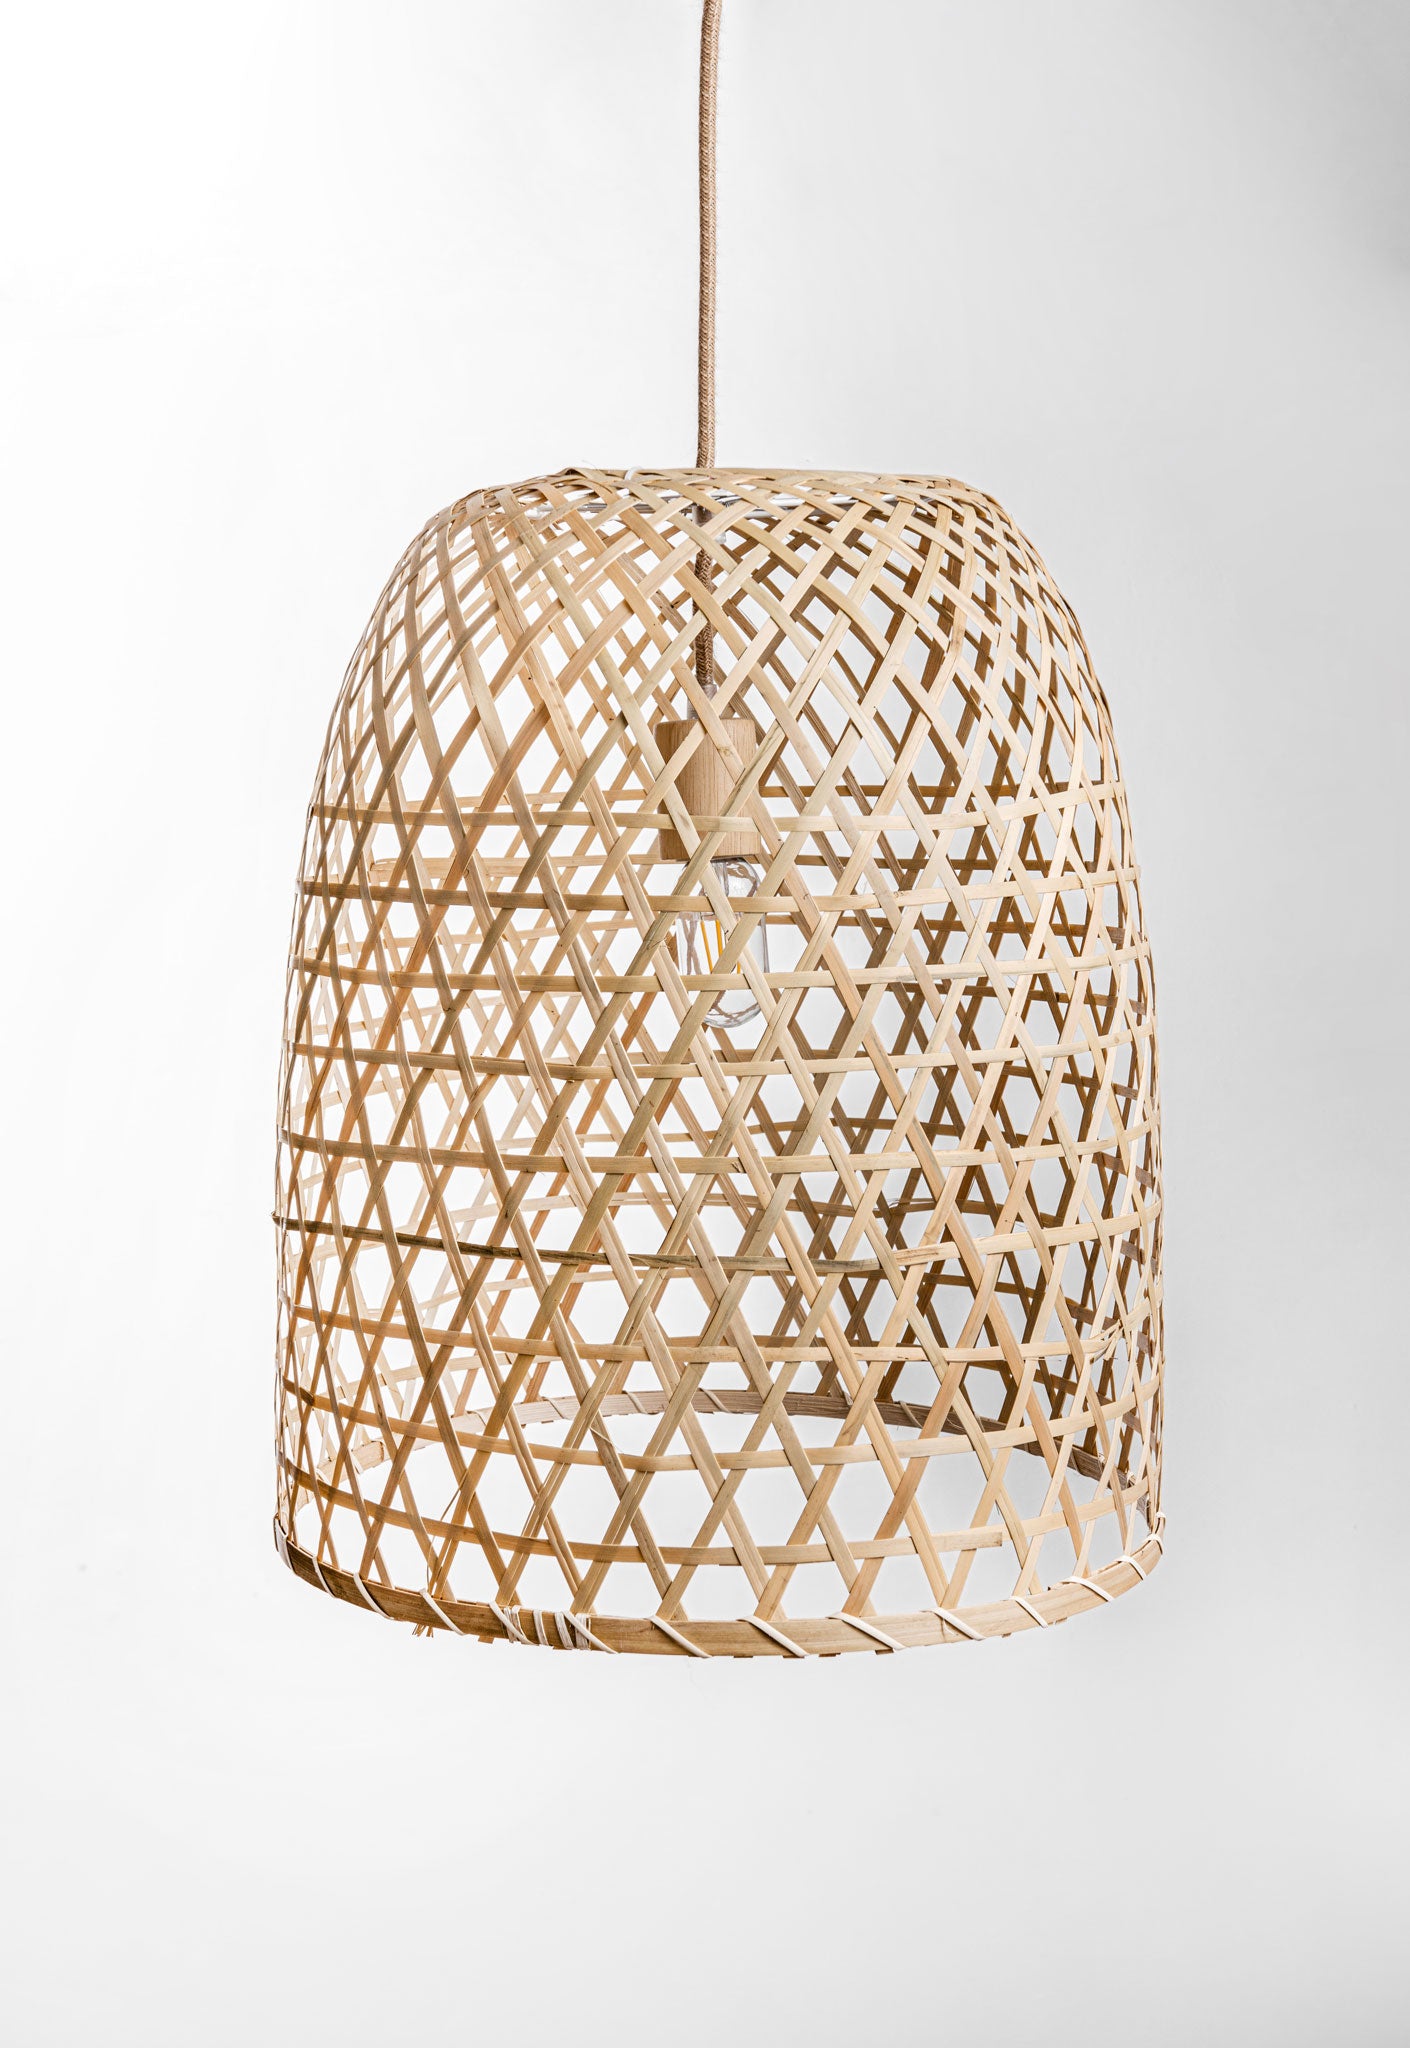 Lồng Bamboo Light Pendant Lamp